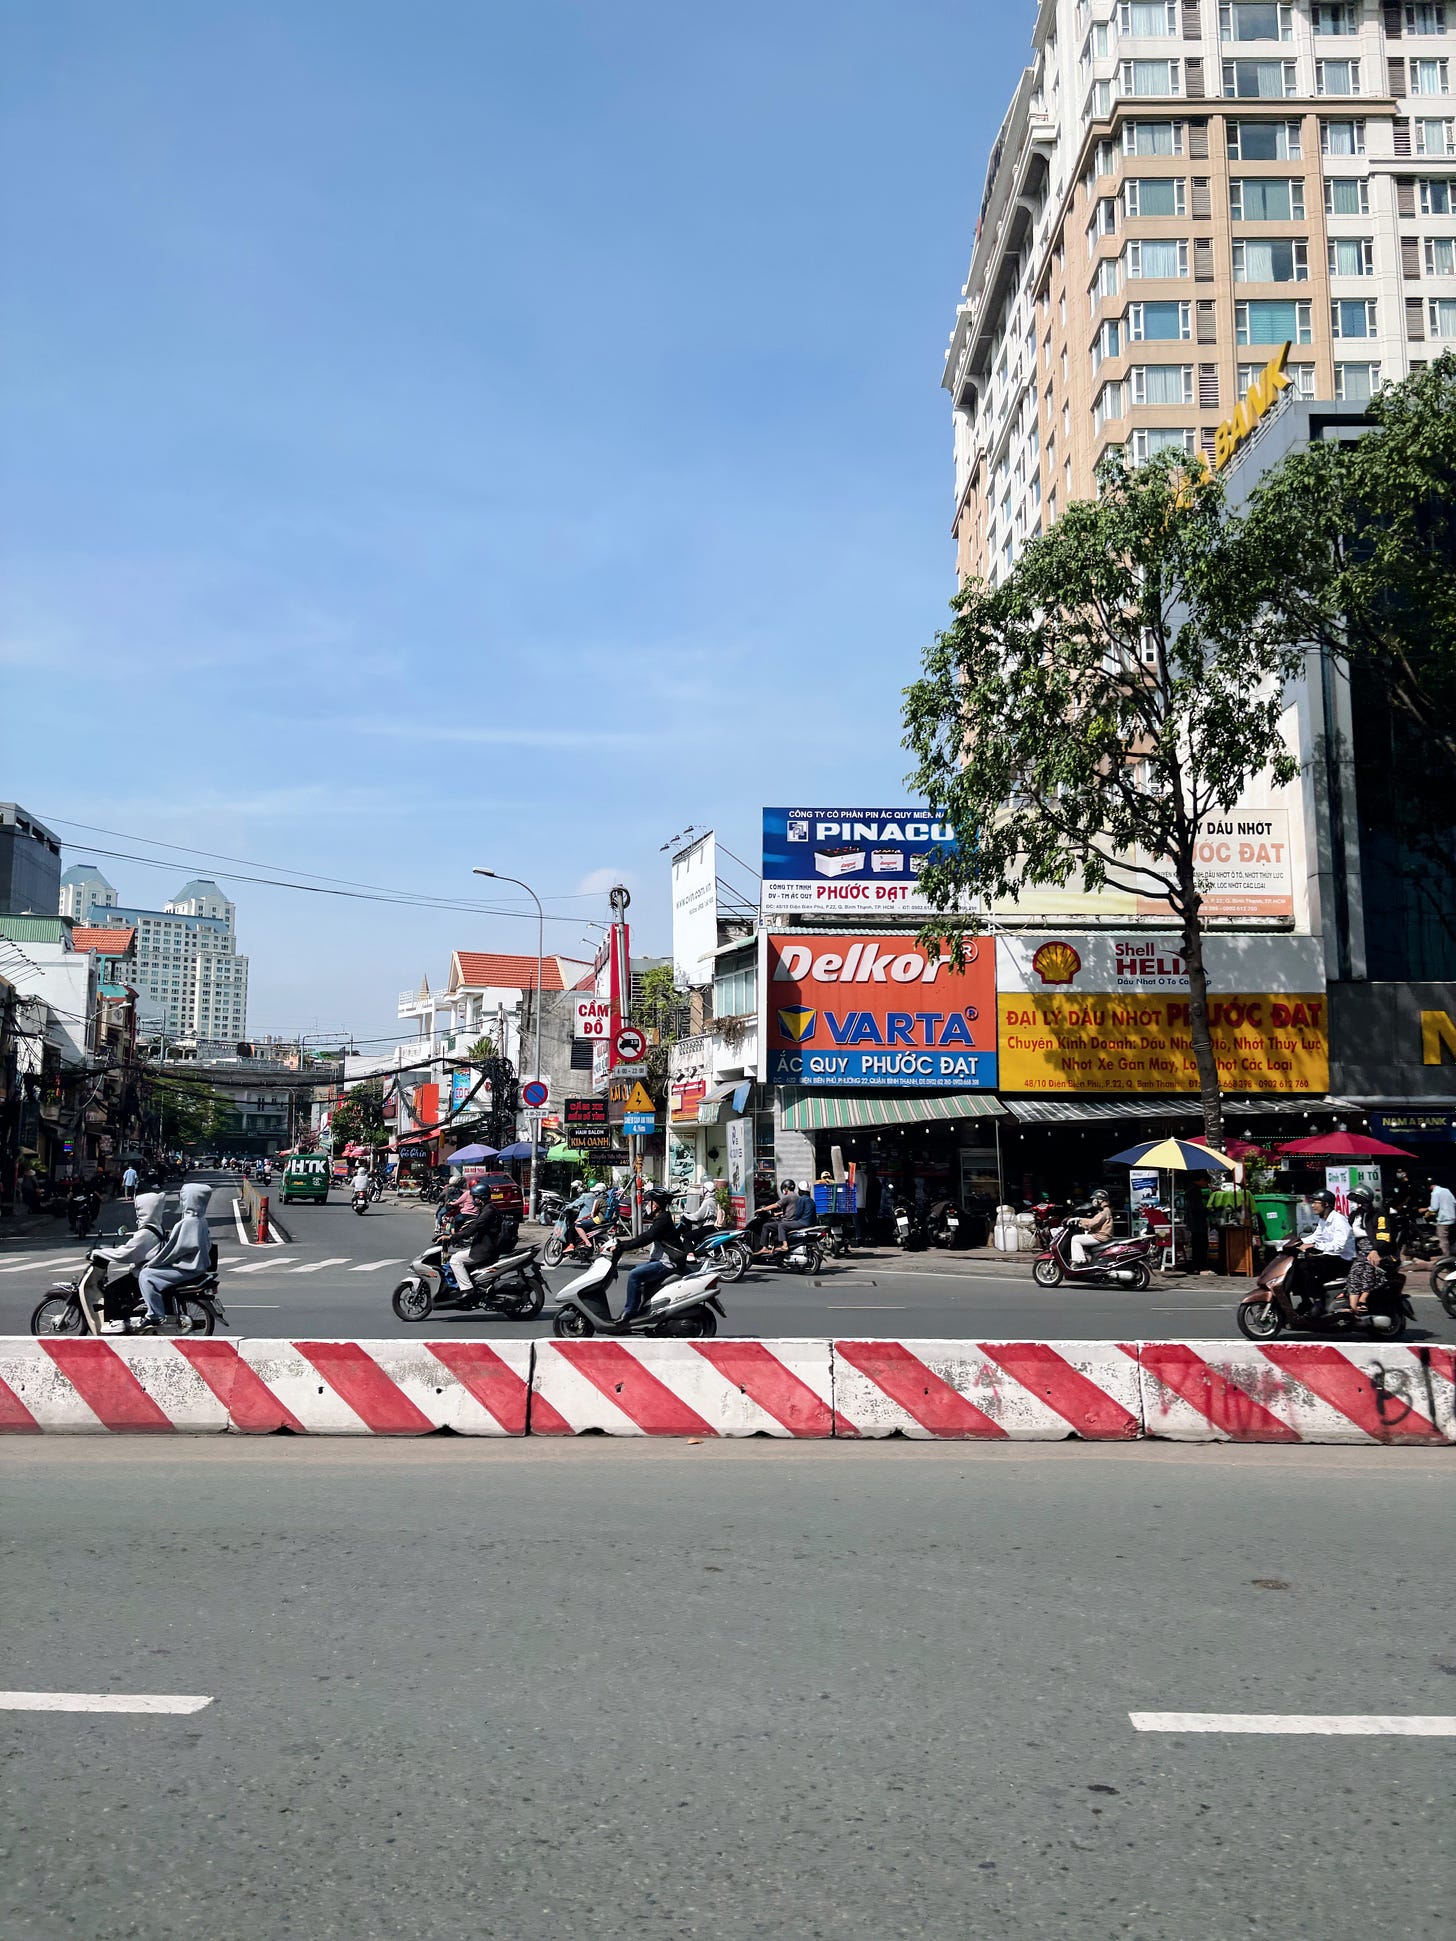 Street and motorbikes in Vietnam